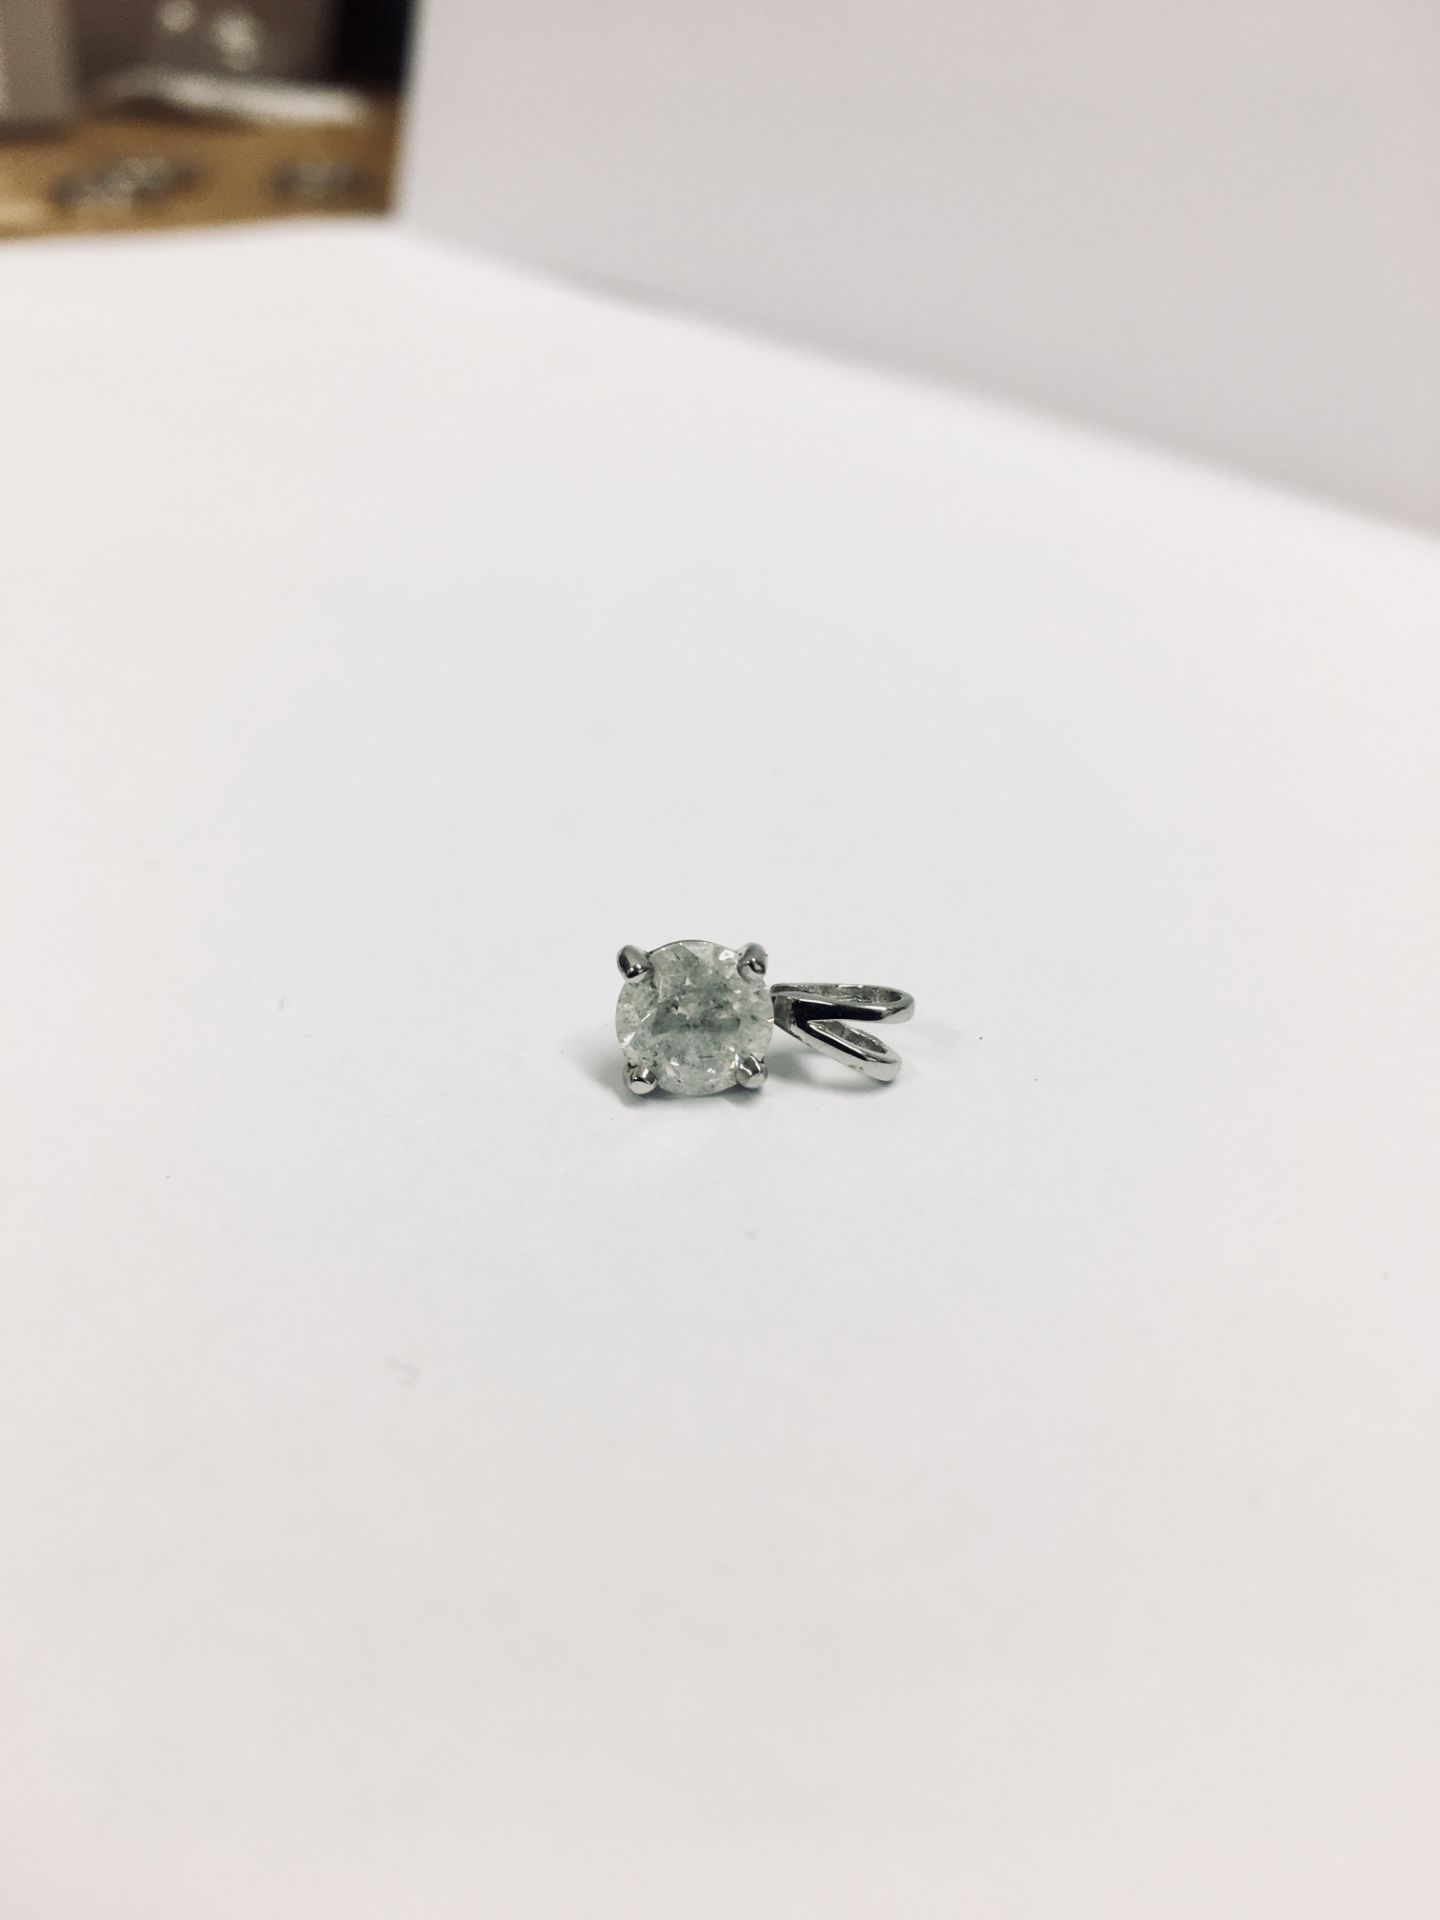 Platinum diamond pendant,1ct diamond 9enhanced ) h colour i2 clarity,1.8gms plainum uk hallmark ,